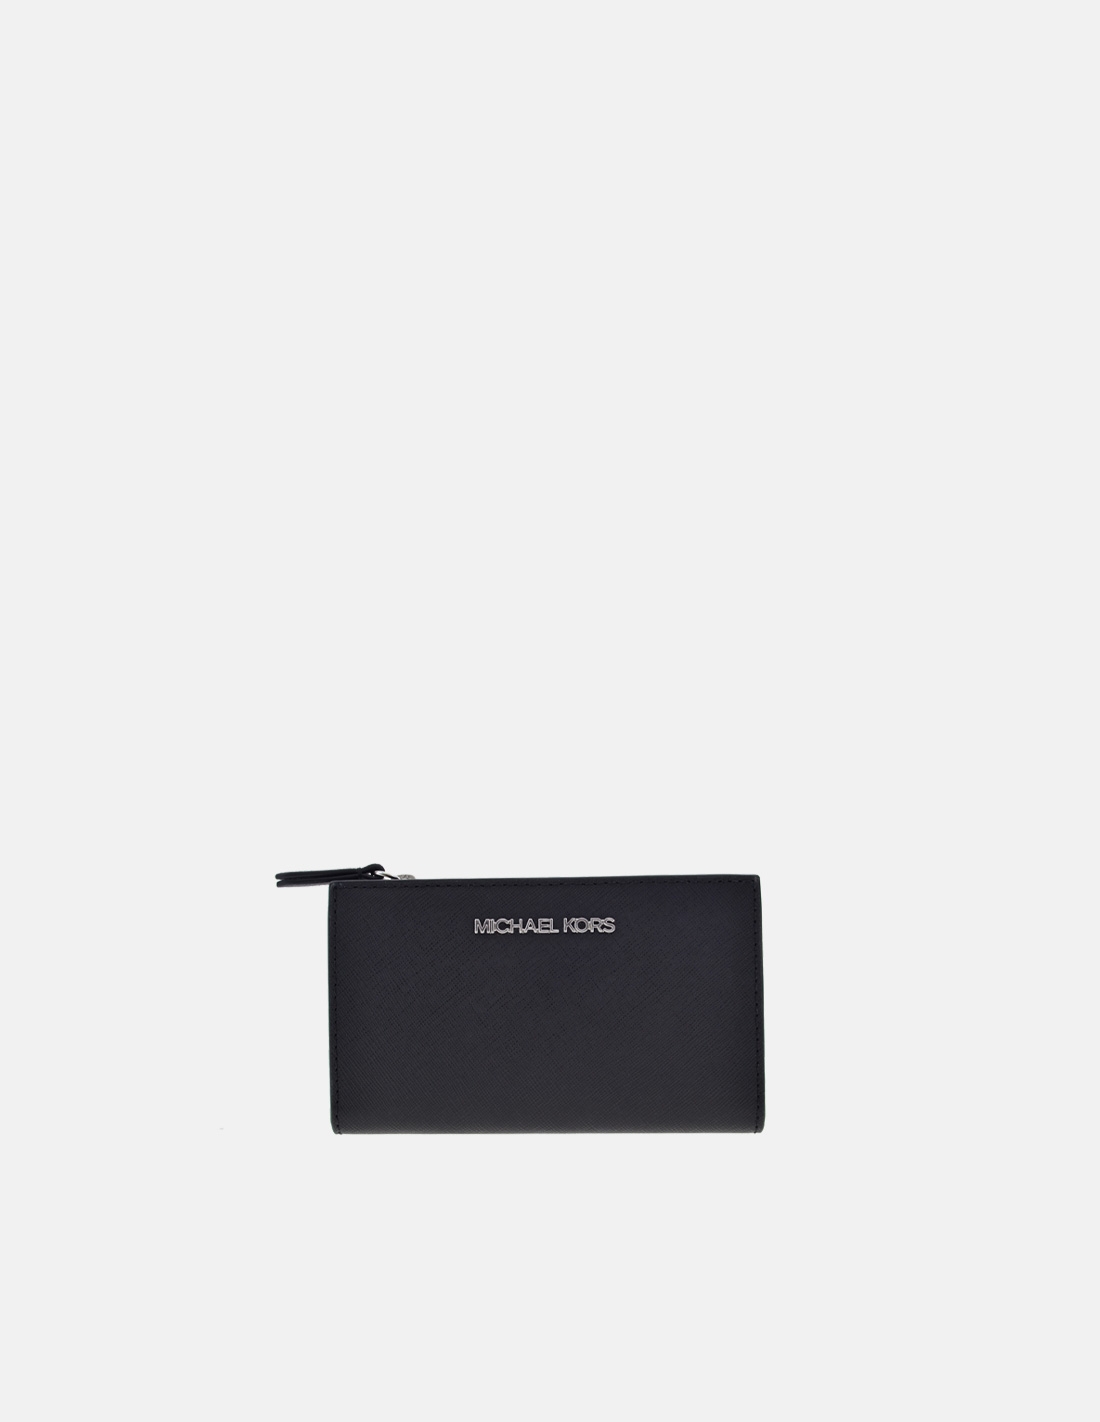 Michael Kors Medium Wallet Black | EB